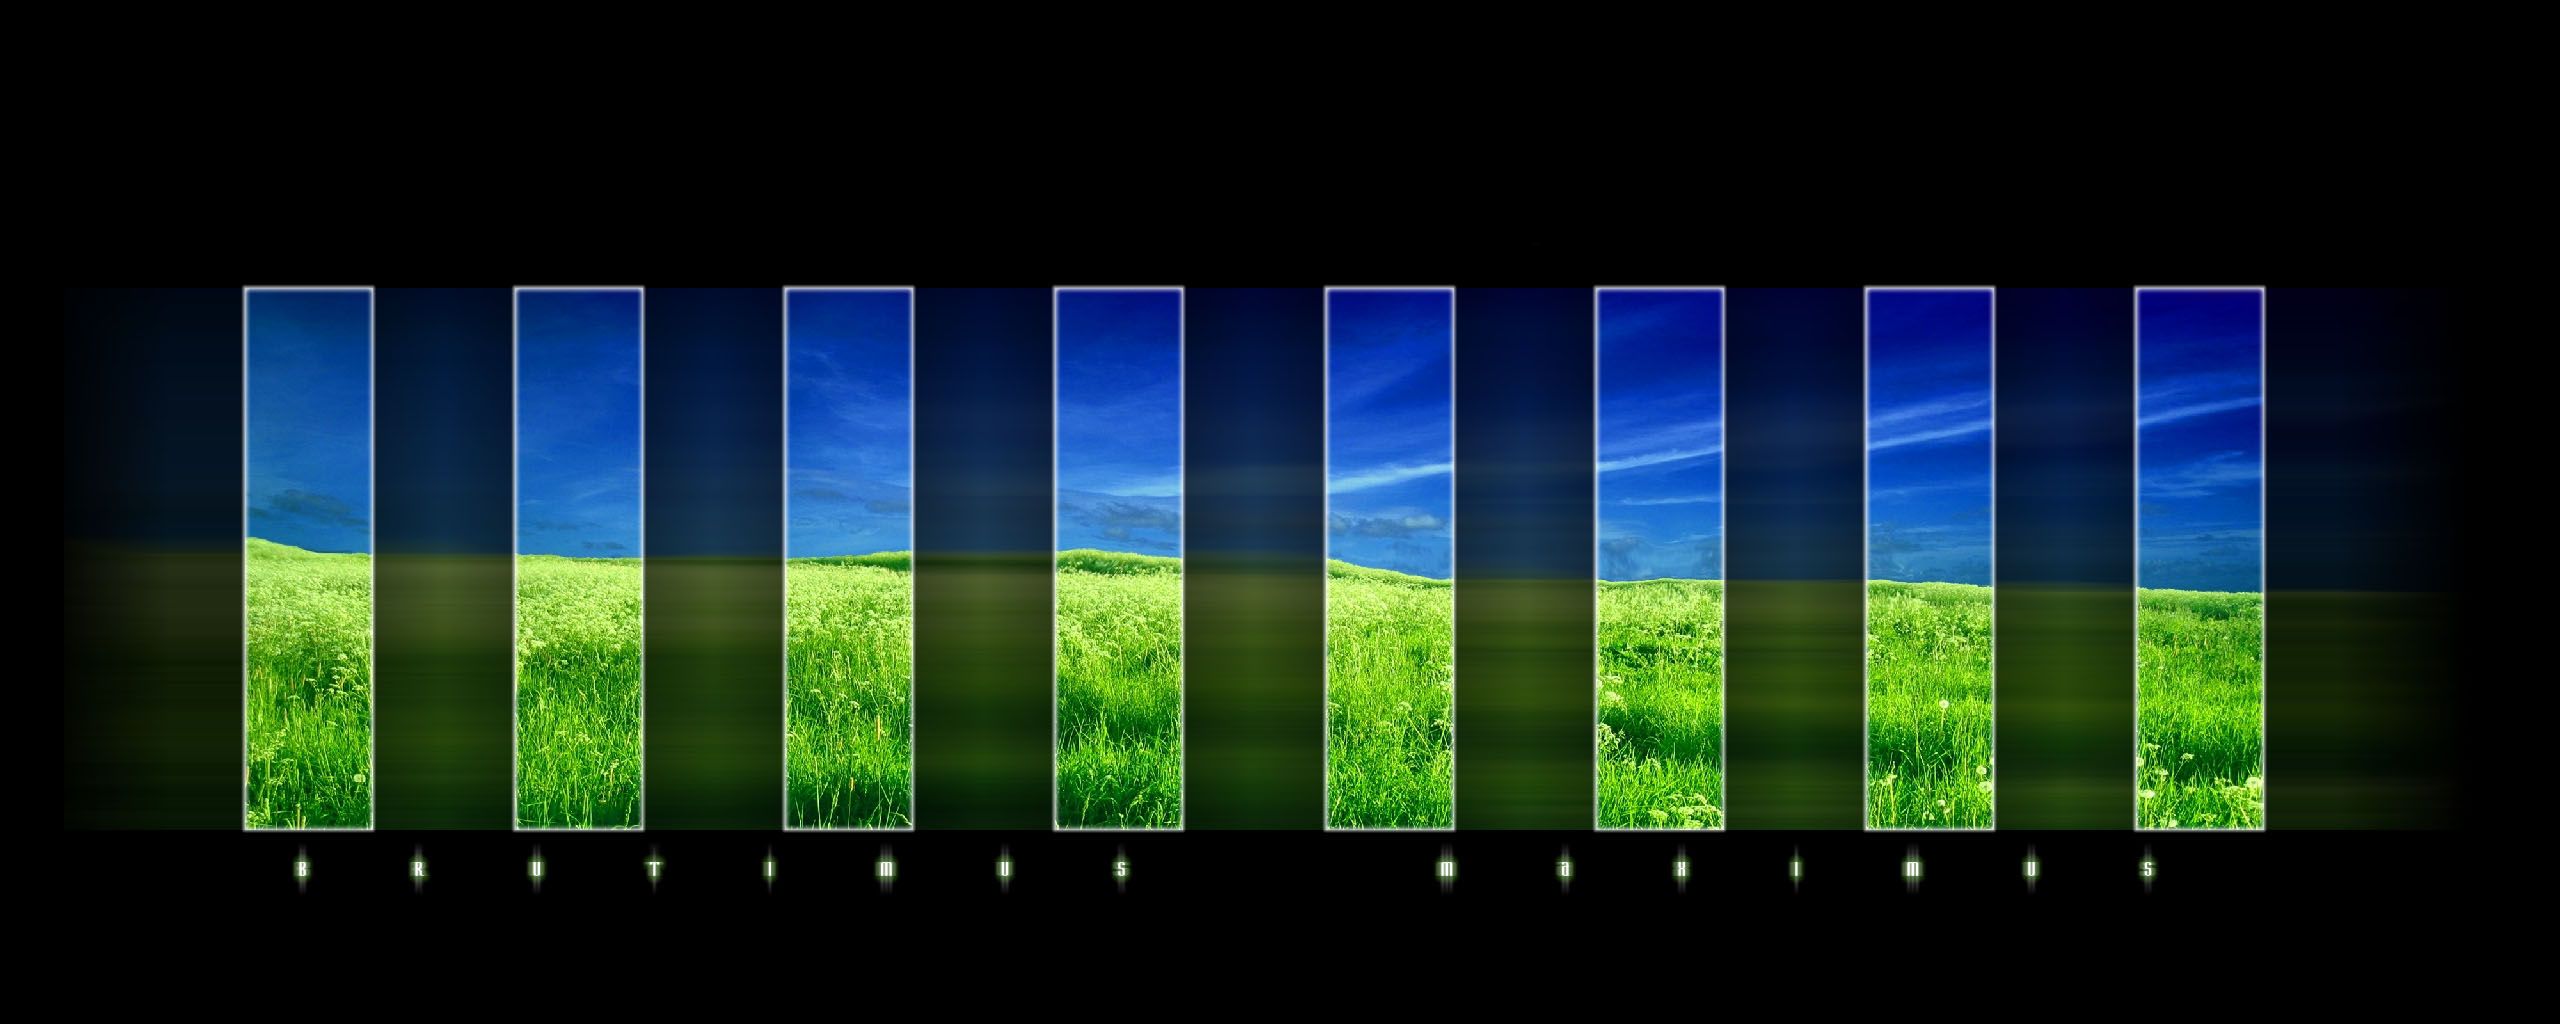 Earth Computer Wallpapers, Desktop Backgrounds | 2560x1024 | ID:31796